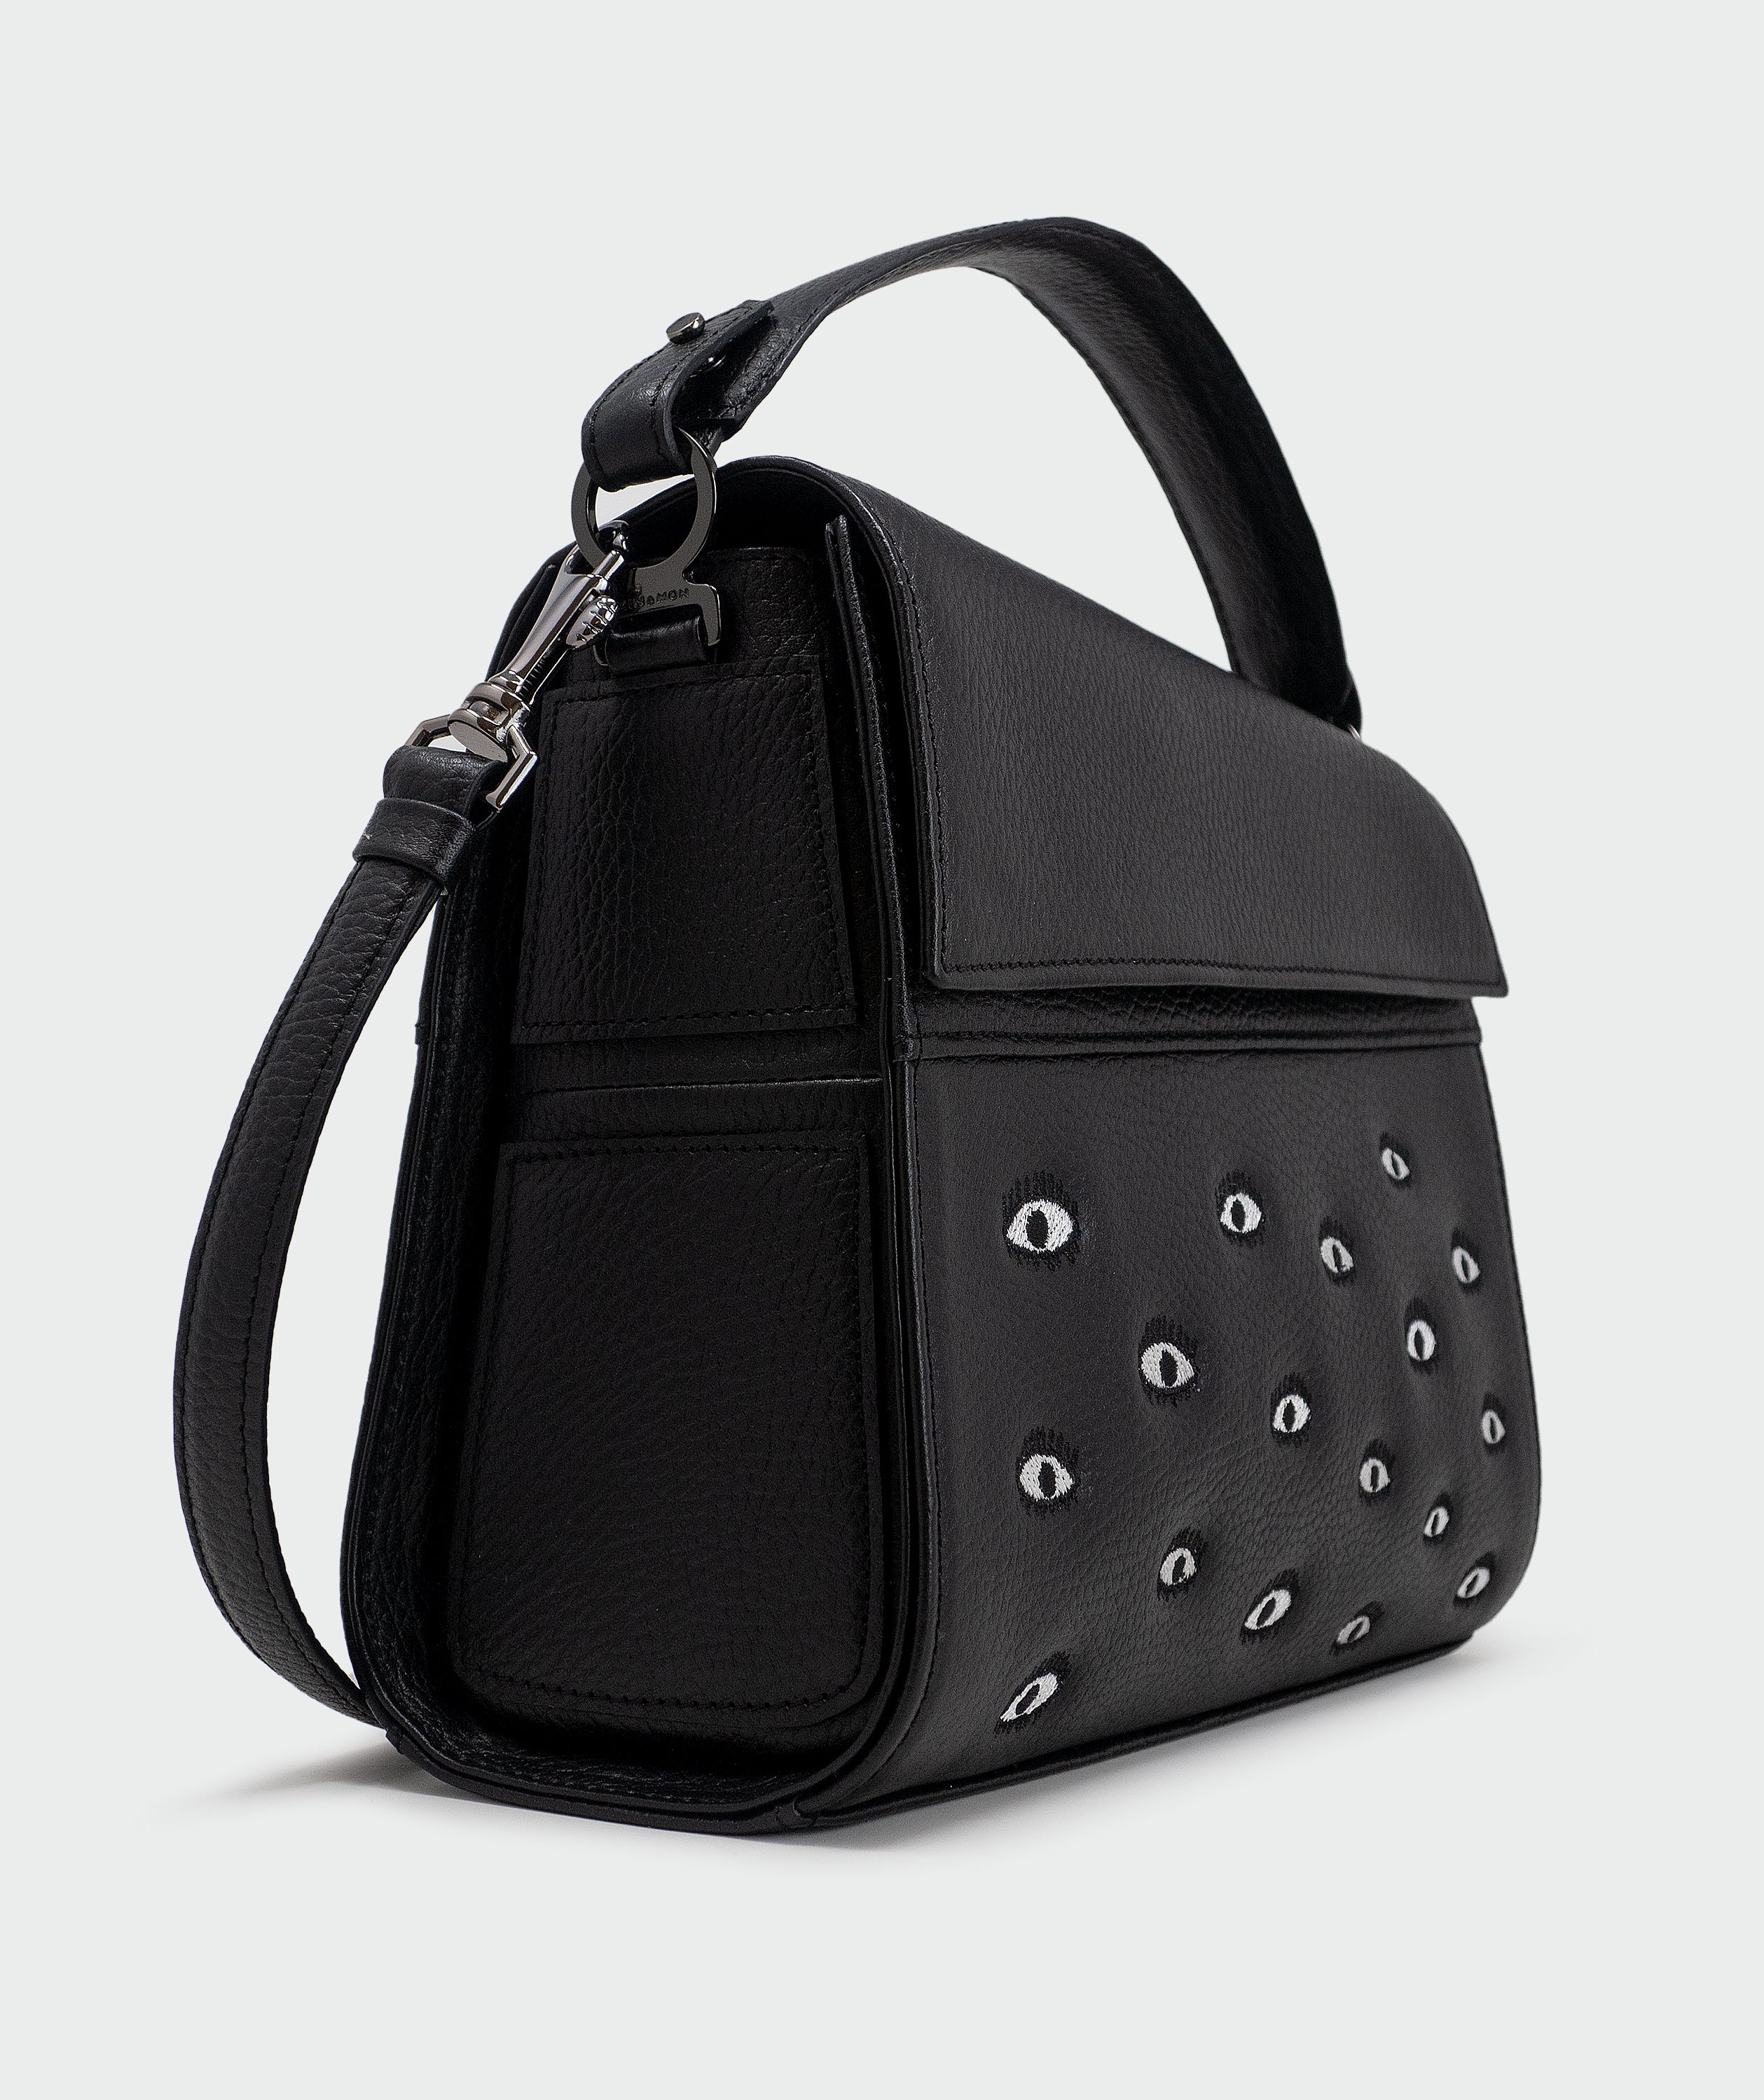 Anastasio Medium Crossbody Handbag Black Leather - Eyes Embroidery - Side view